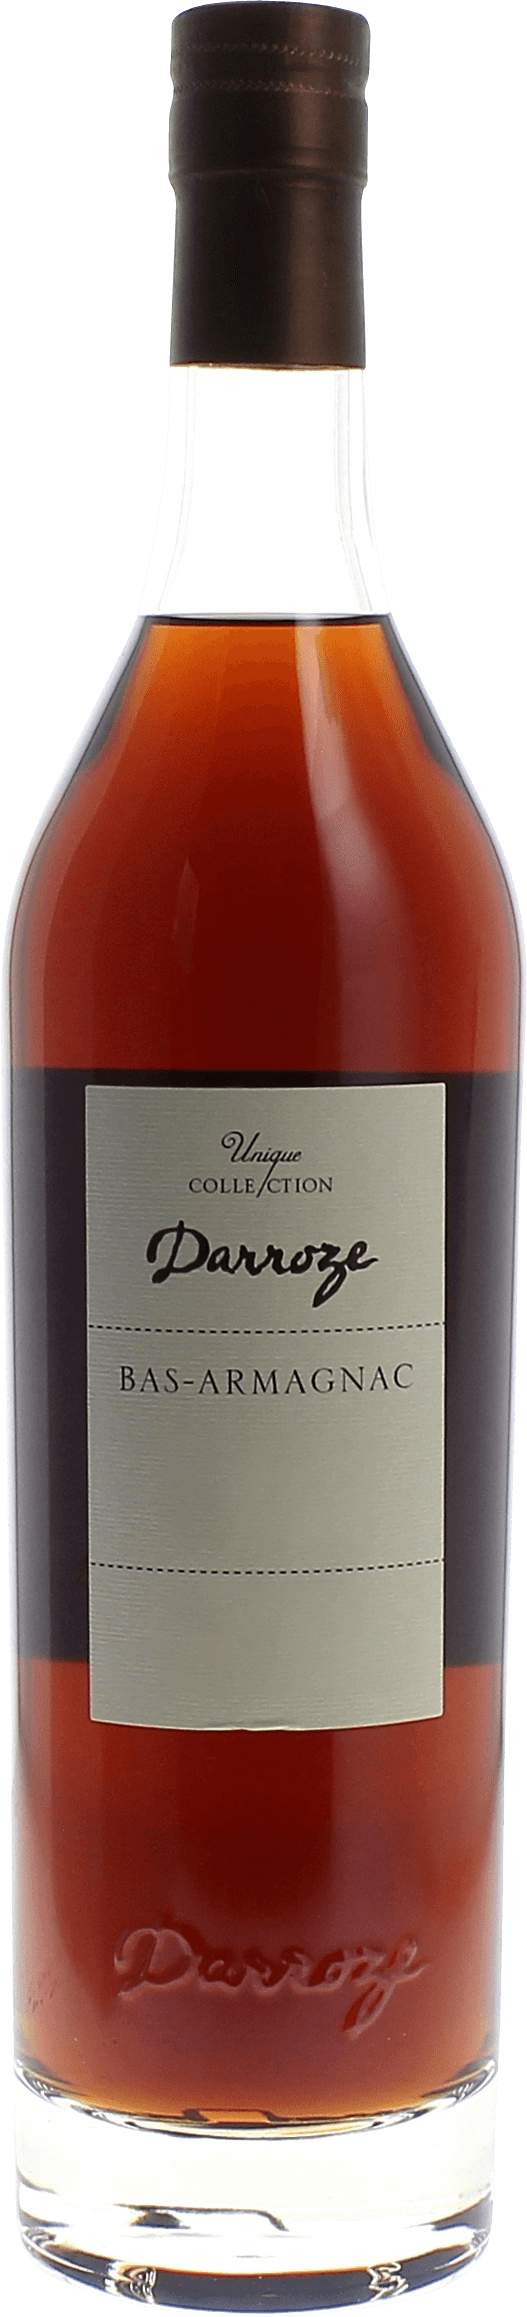 Domaine au durre 49,5 1995  Bas Armagnac, DARROZE  Francis Bas Armagnac